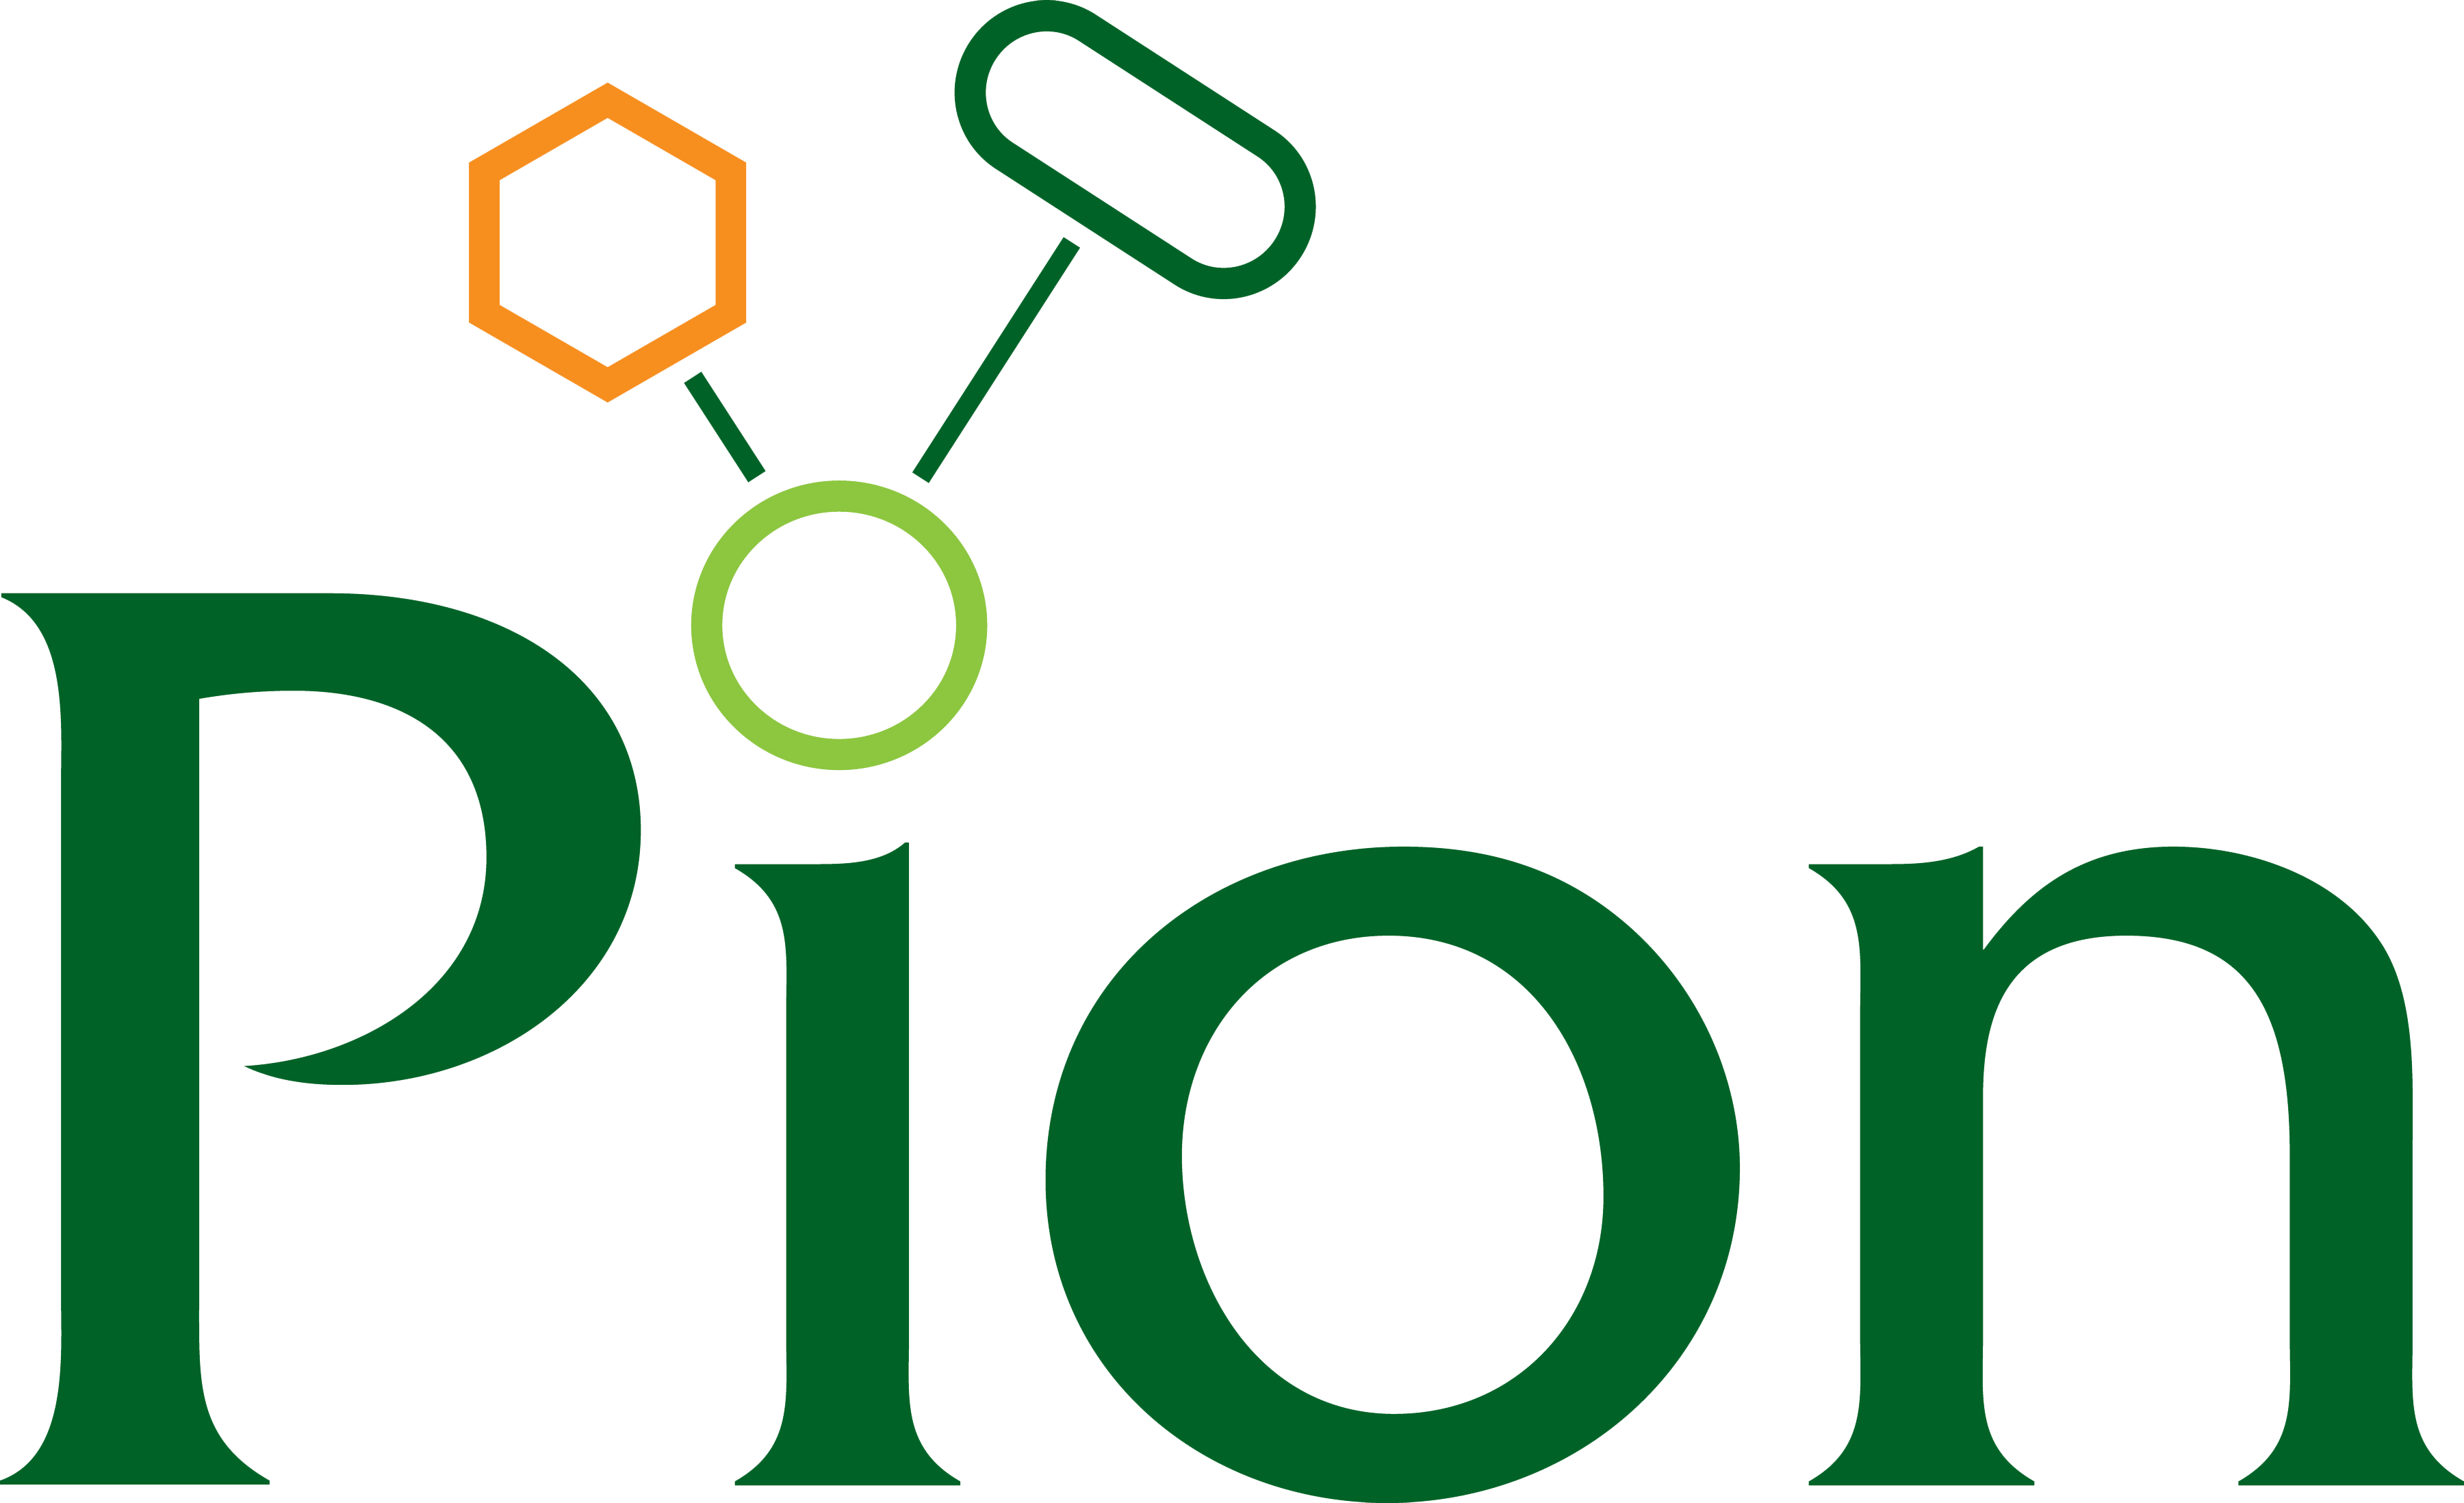 Pion Inc